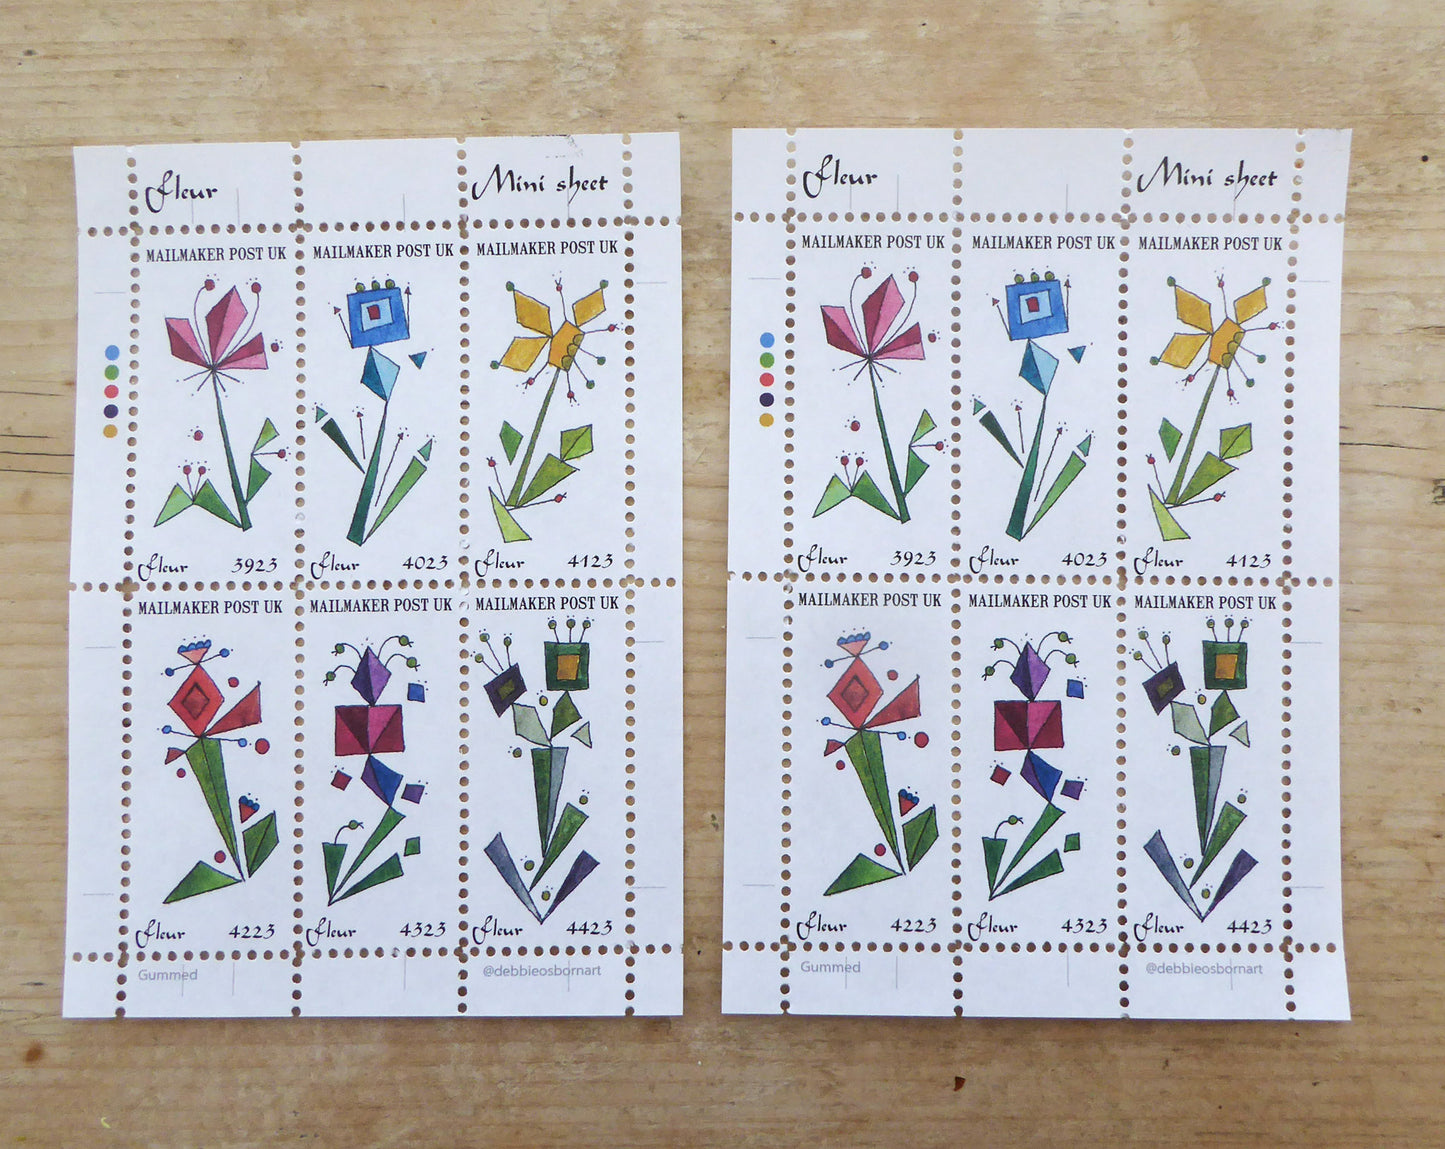 Faux Postage Stamps - 2 sheet set - Flowers - Cinderella Stamps - Mail Art Stamps - perforated - gummed - Handmade by Norfolk Artist Debbie Osborn